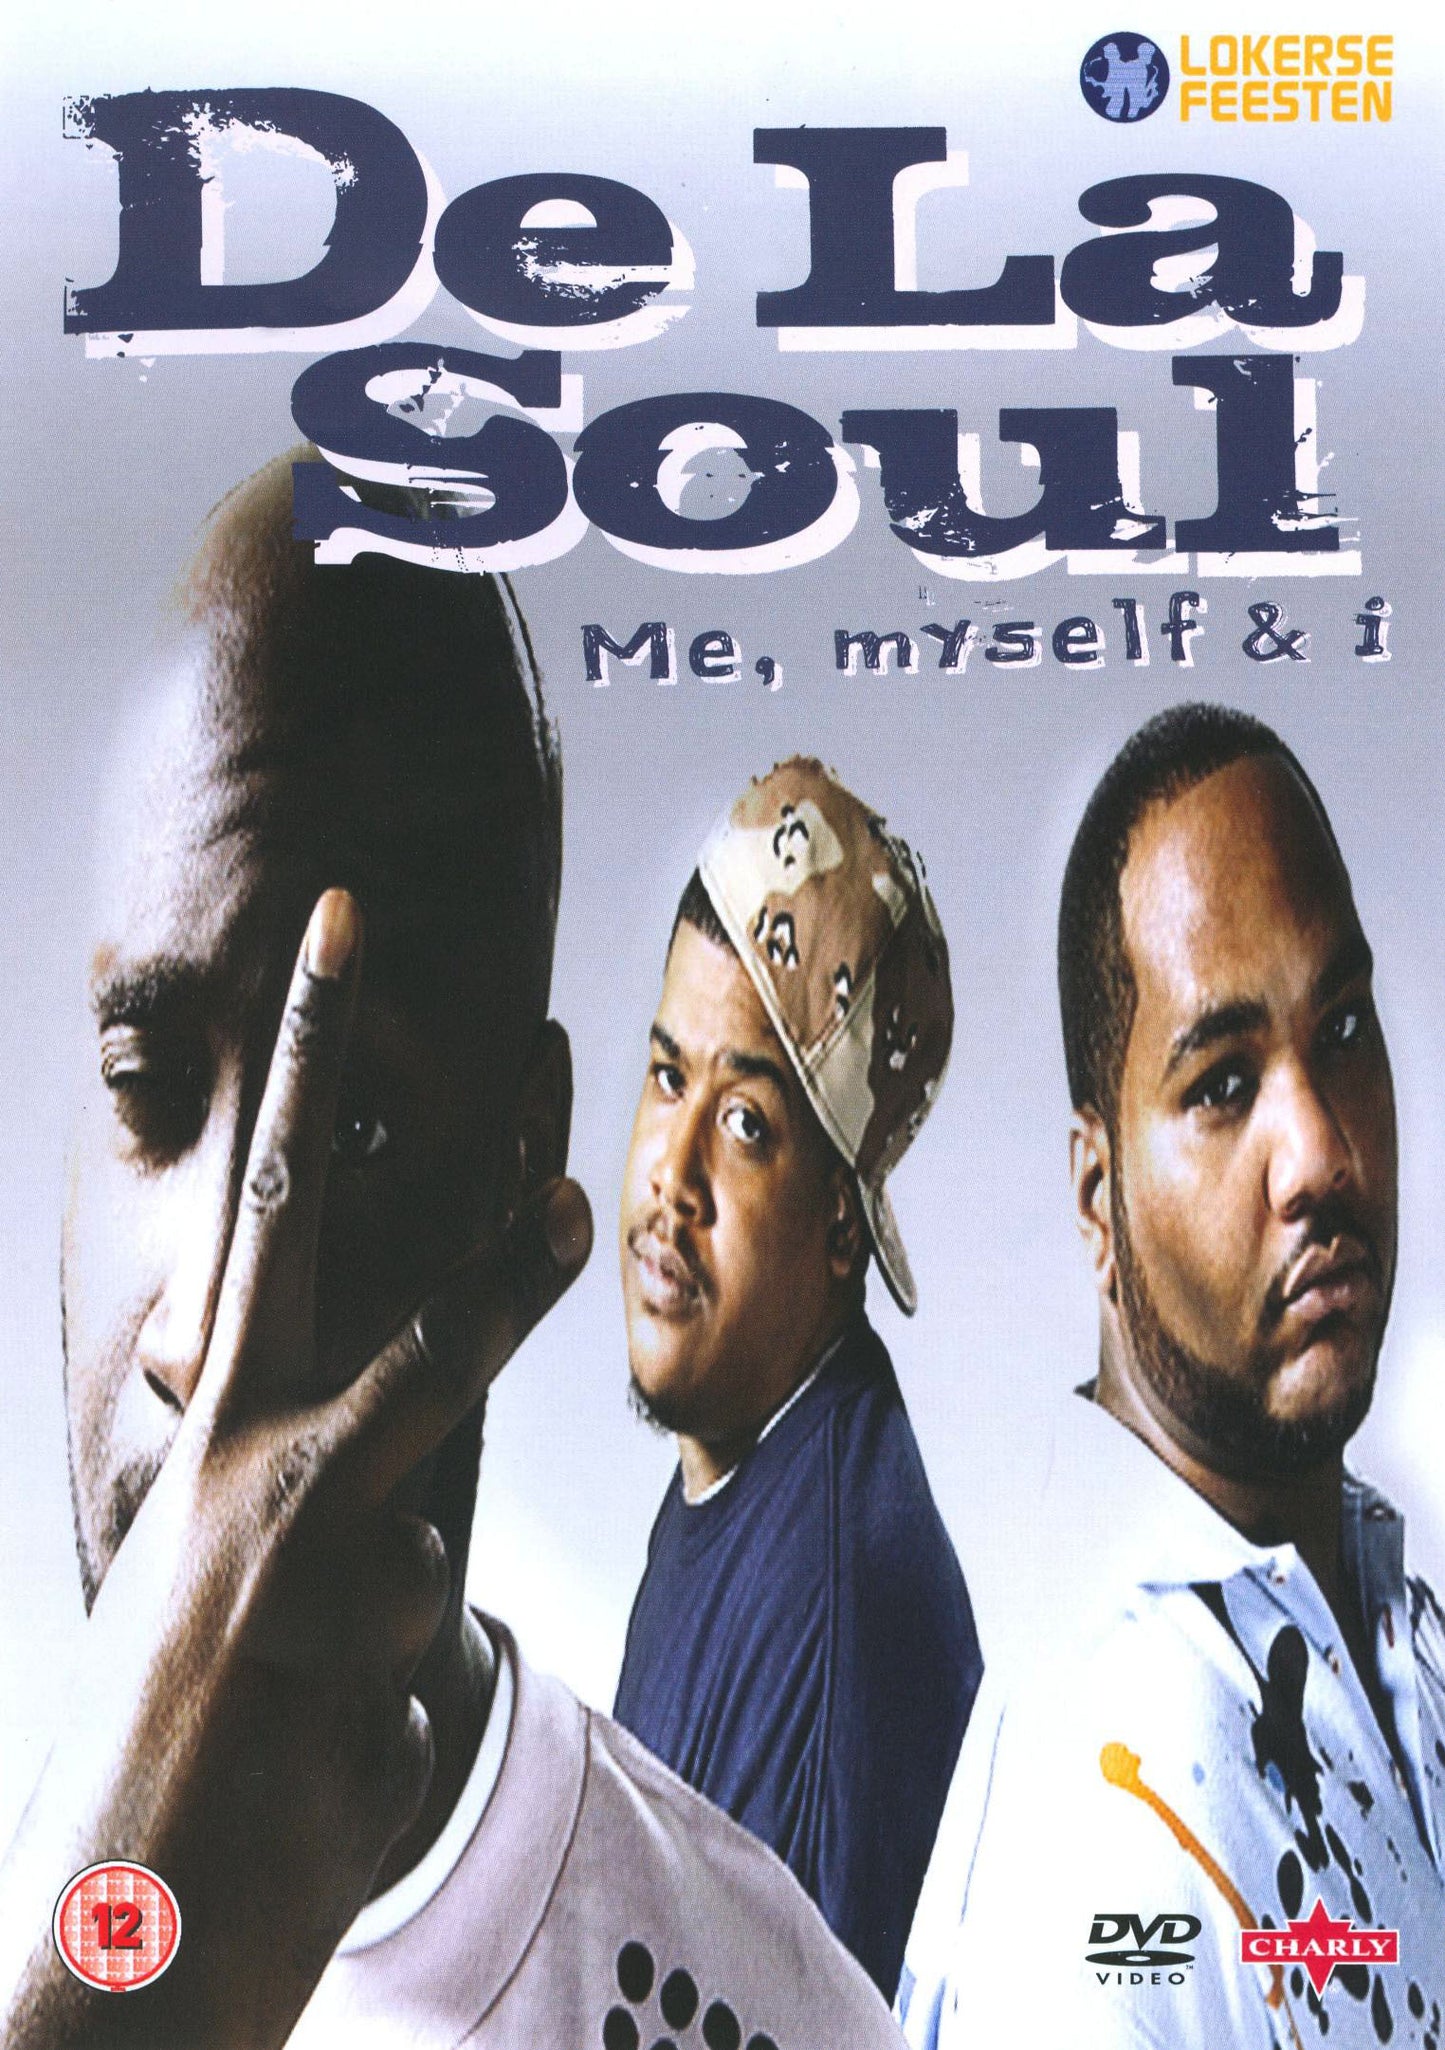 Me, Myself & I [DVD] cover art